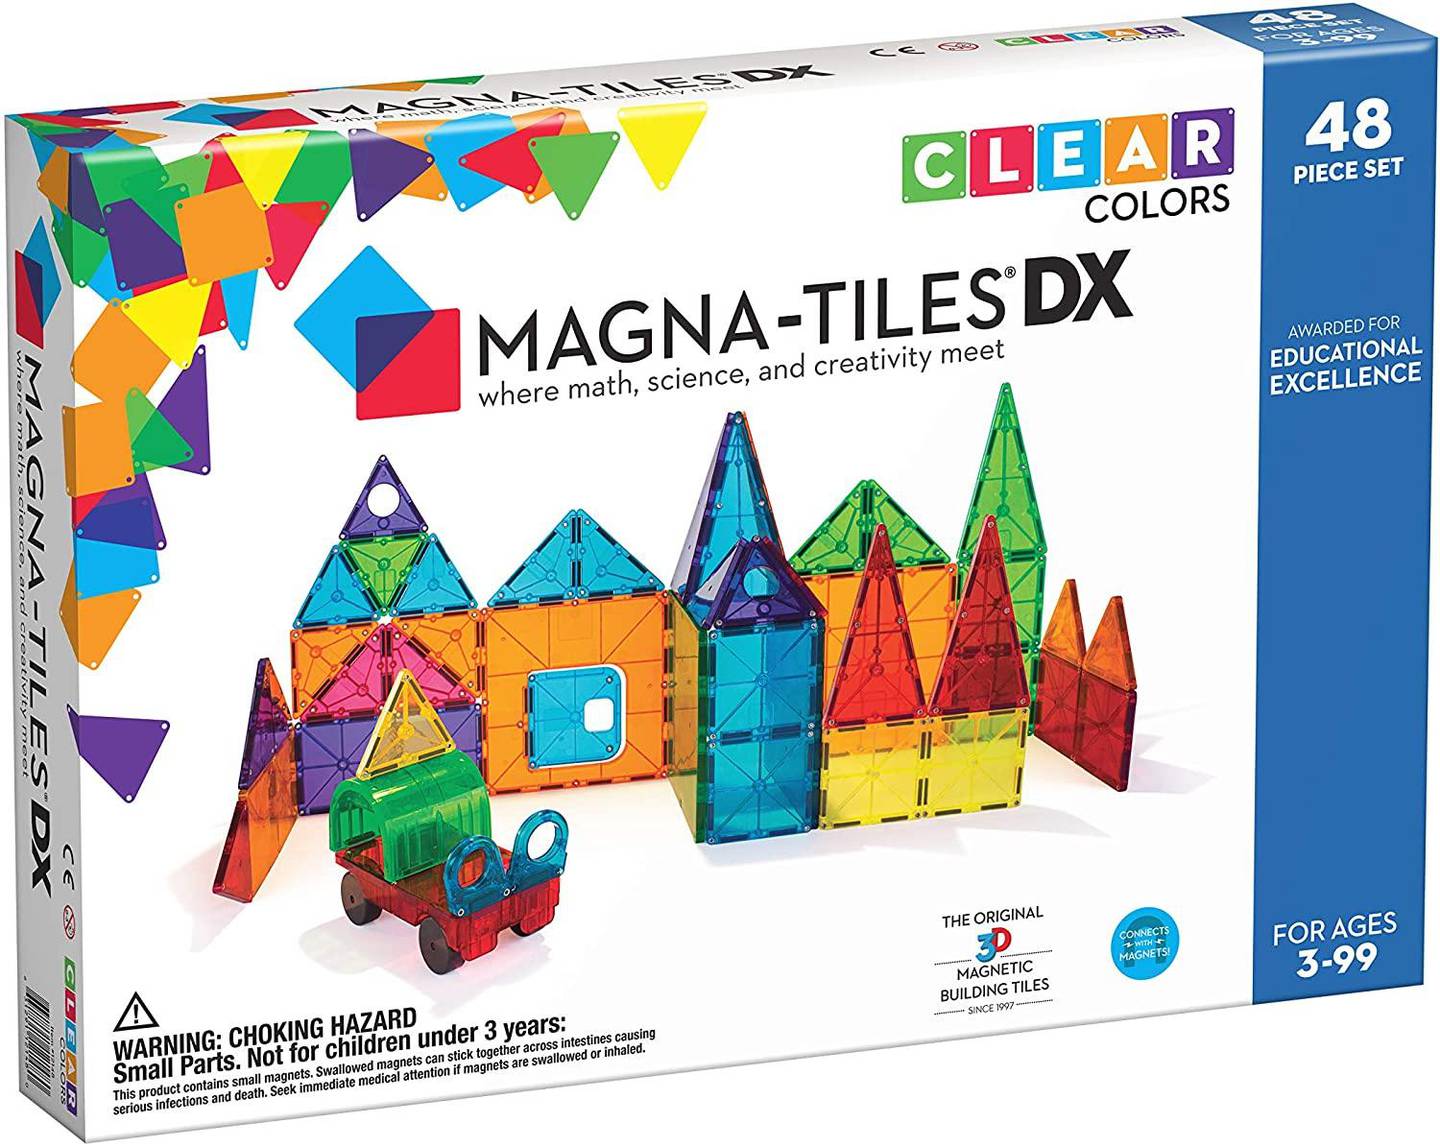 Magna-Tiles are a favourite for children who enjoy building. Courtesy Amazon 